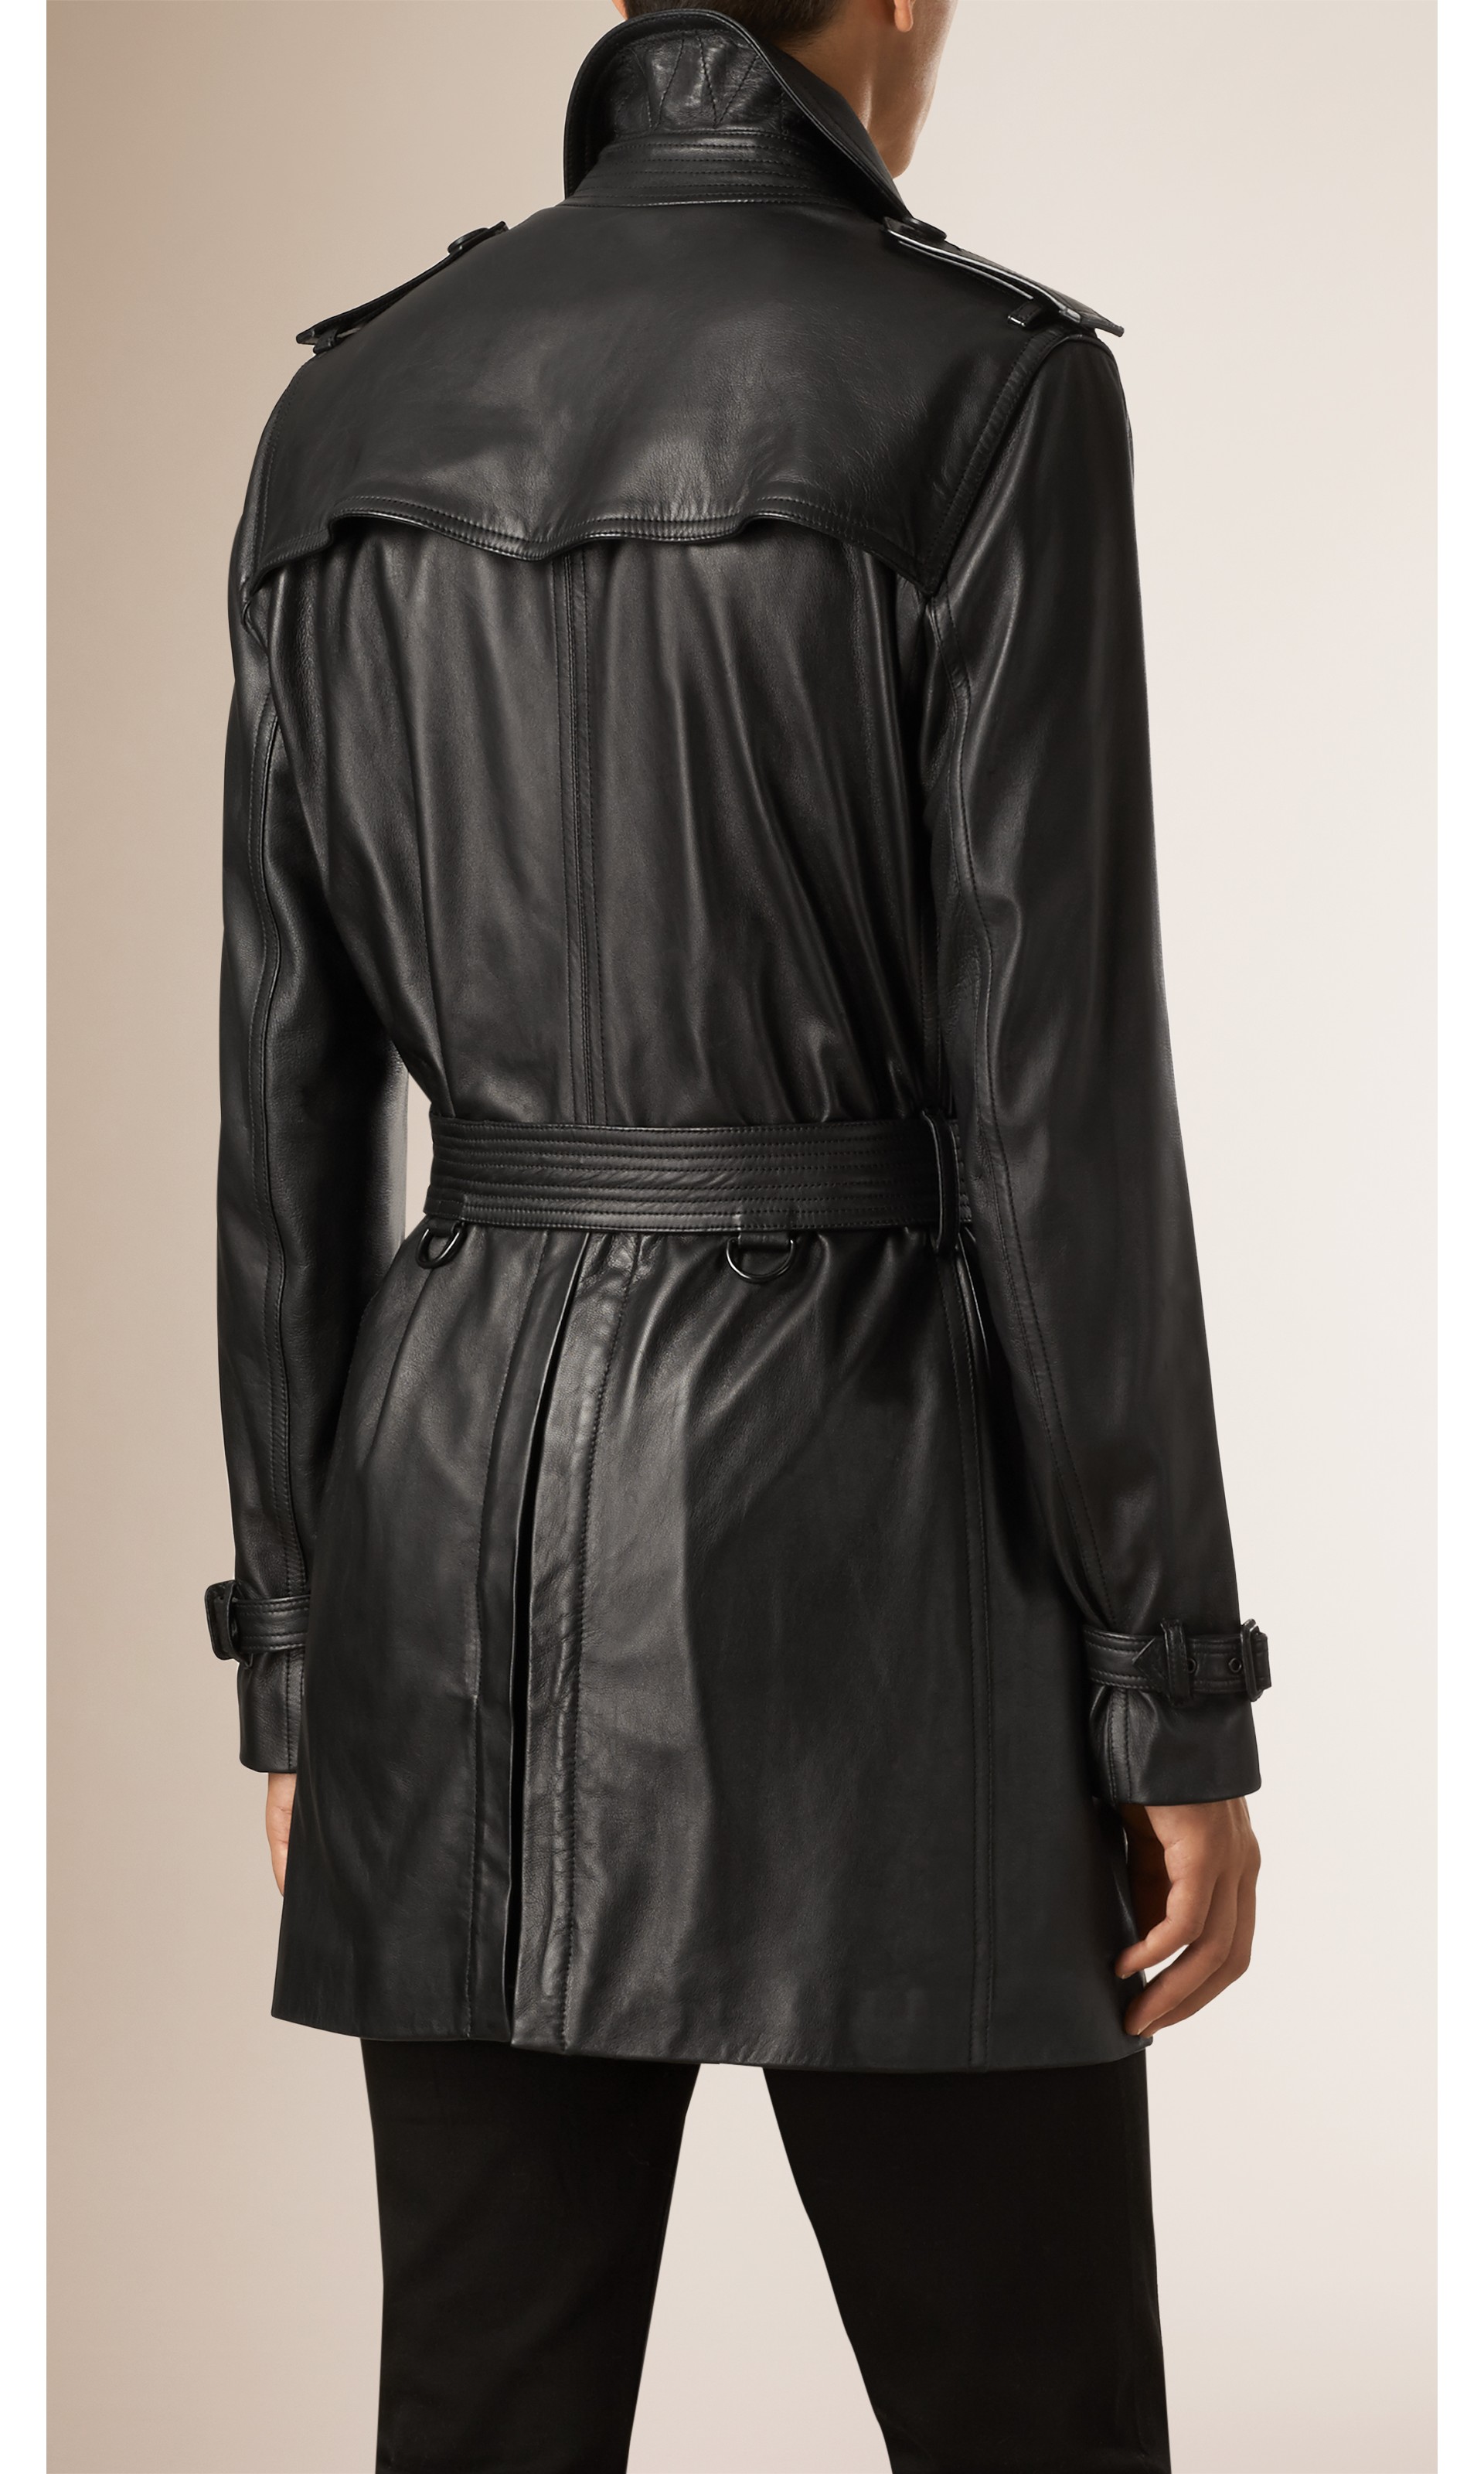 Nappa Leather Trench Coat in Black - Men | Burberry United Kingdom